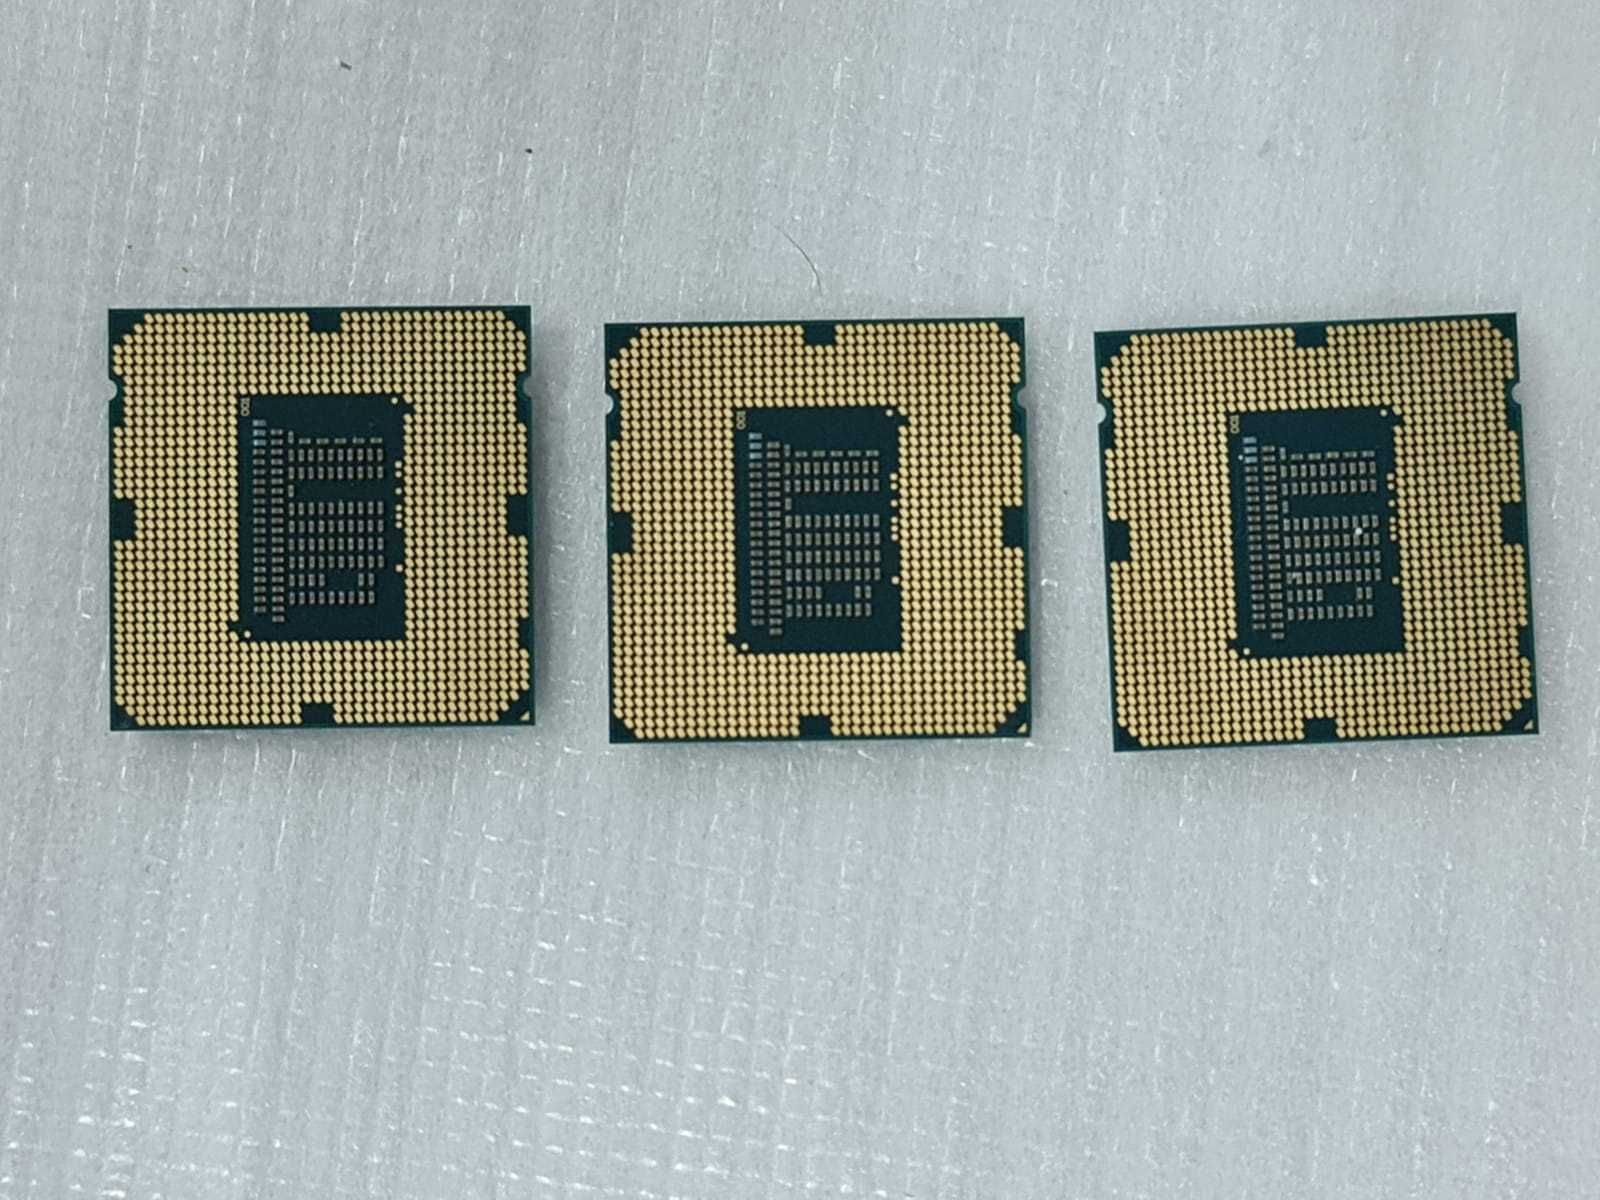 Procesor Intel Core i3 3220, 3300MHz, 3MB, socket 1155 - poze reale